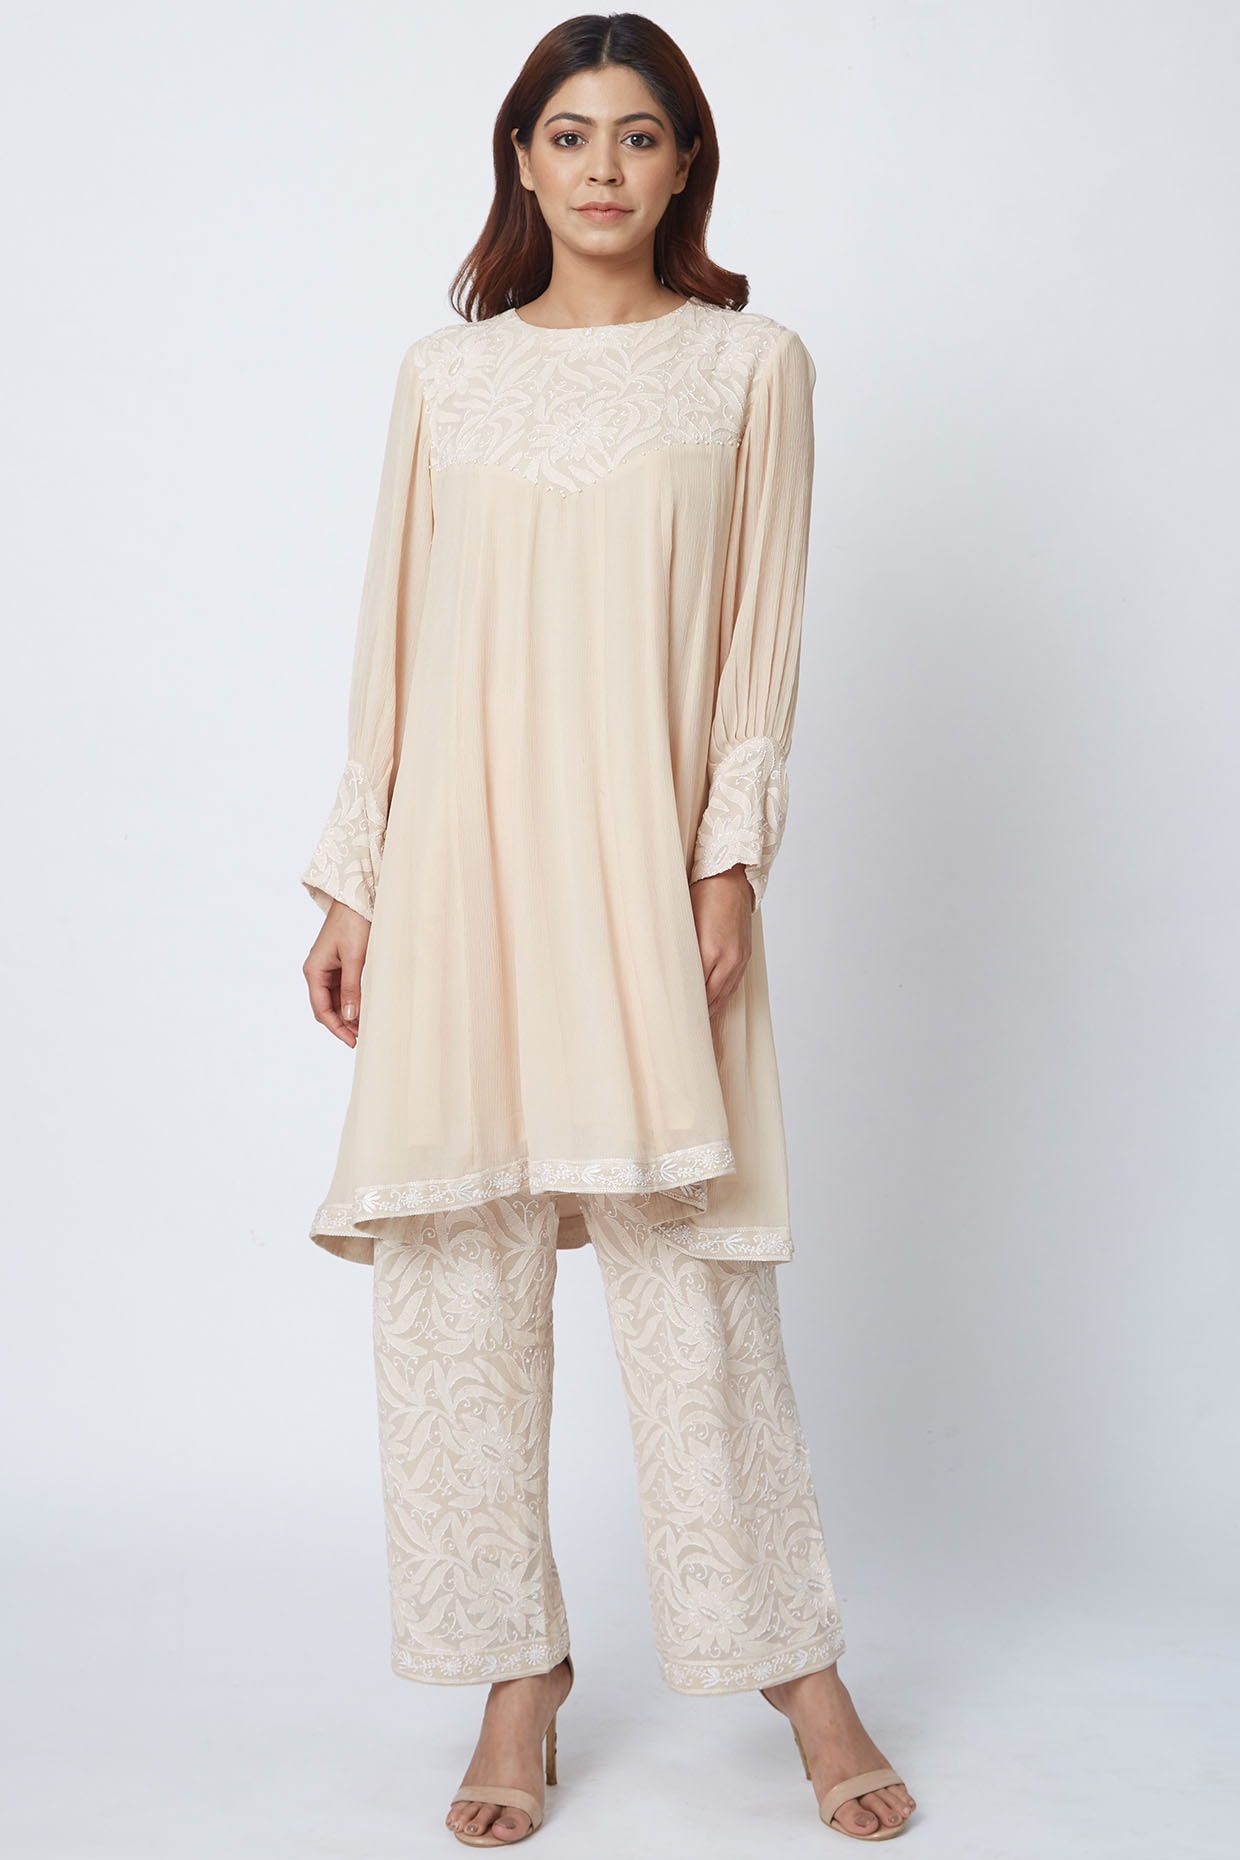 Buy Designer Pakistani Suits for Women Online | Libas